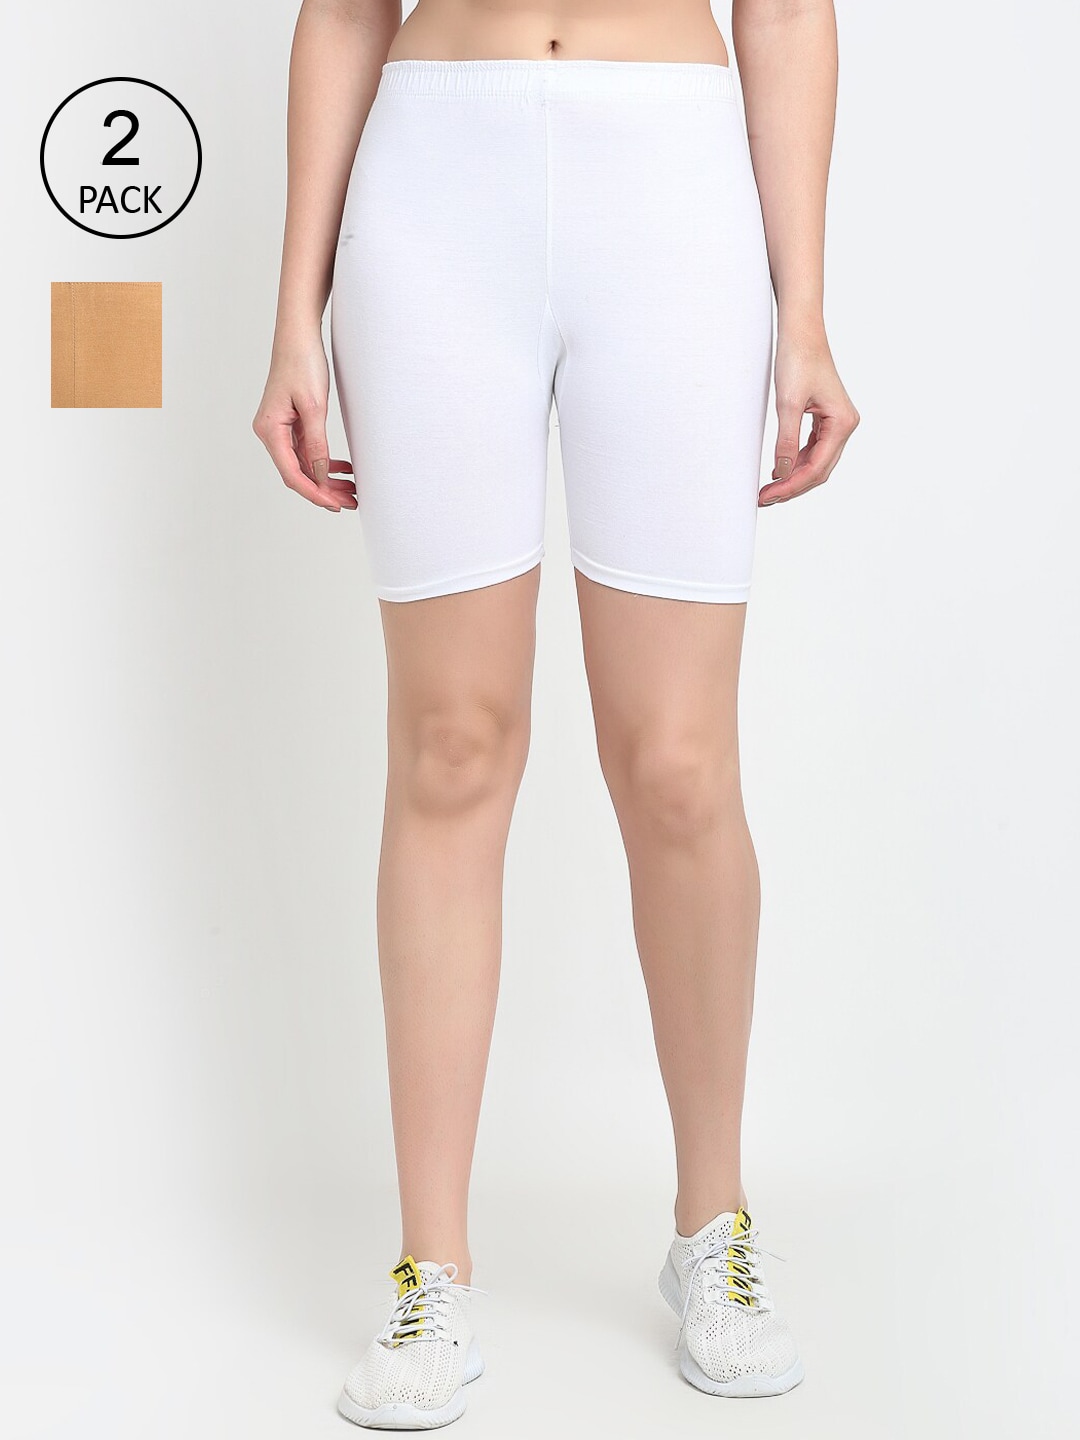 GRACIT Women White & Beige Set Of 2 Biker Shorts Price in India